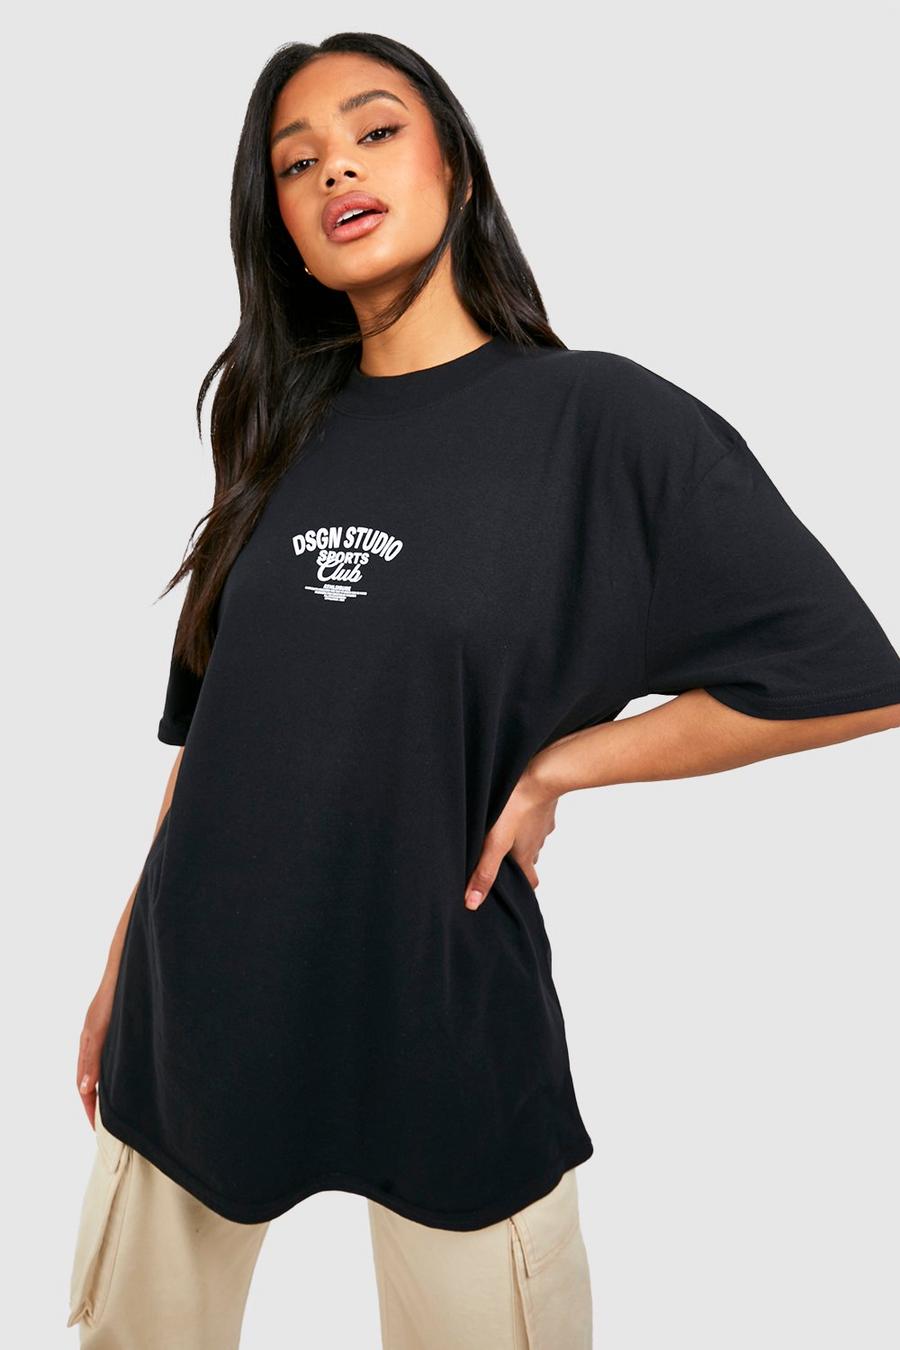 Black Oversized Dsgn Studio Sports Club T-Shirt Met Tekst